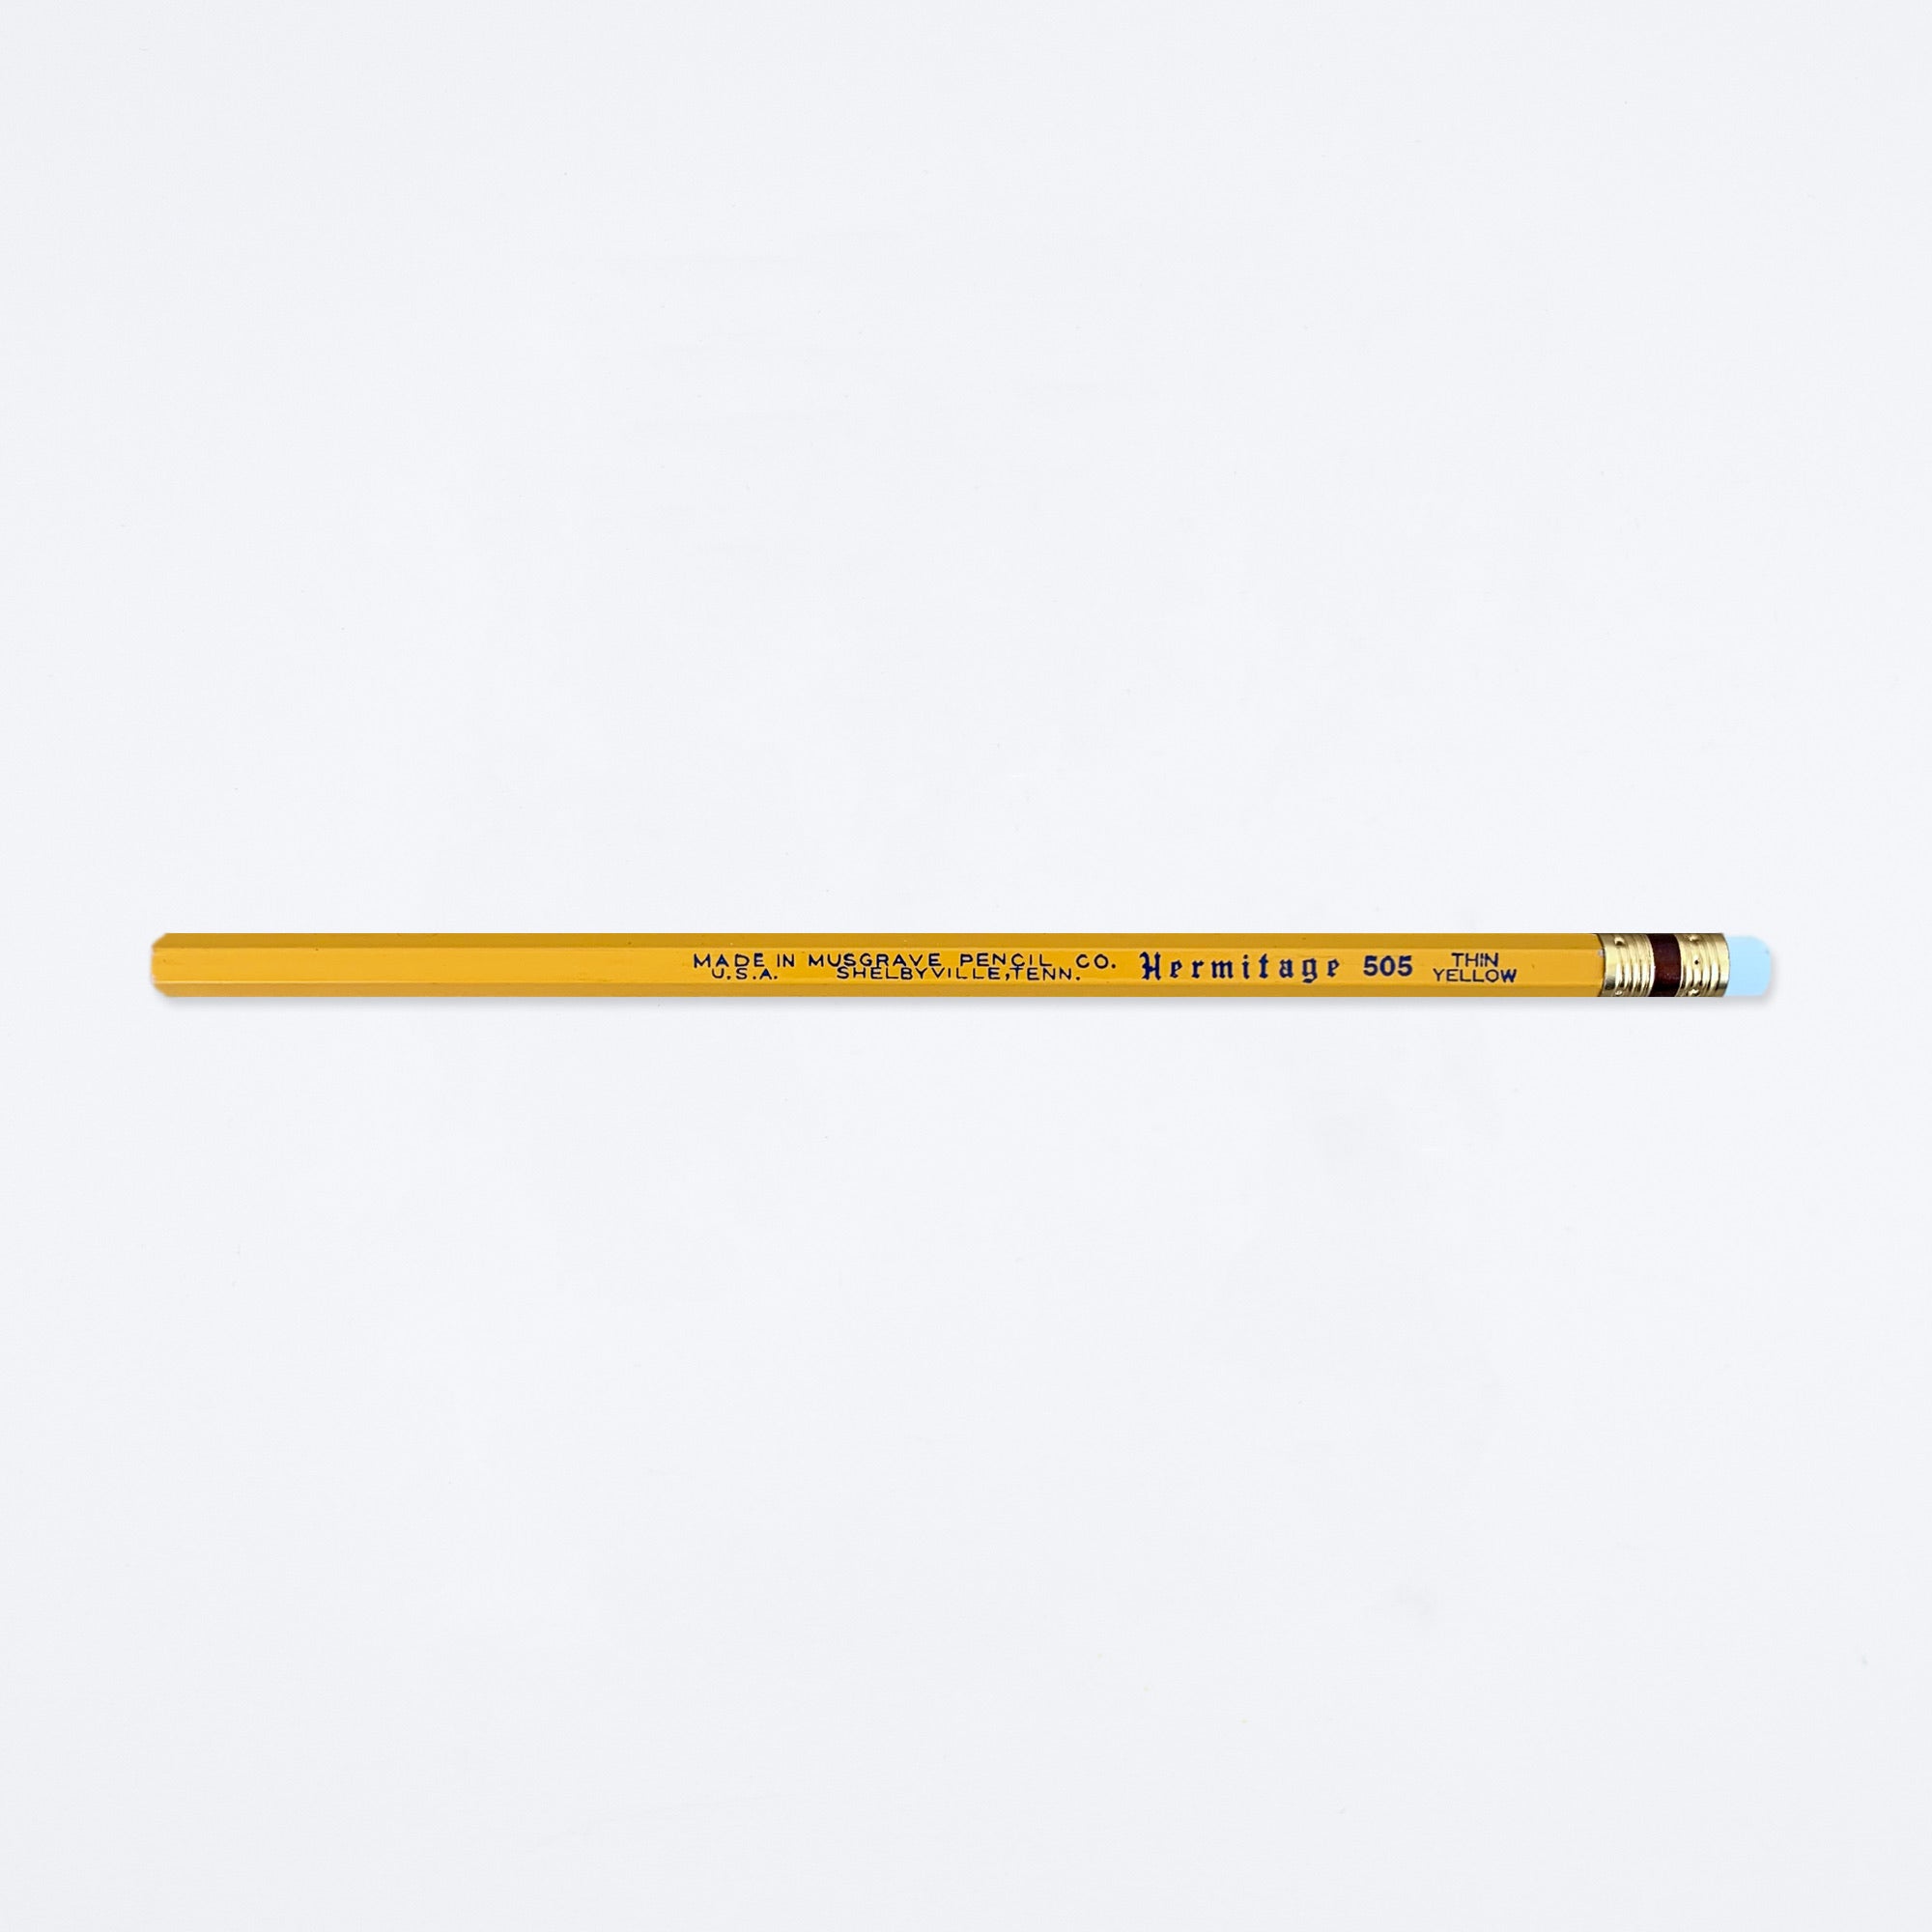 Hermitage Thin Yellow Pencil